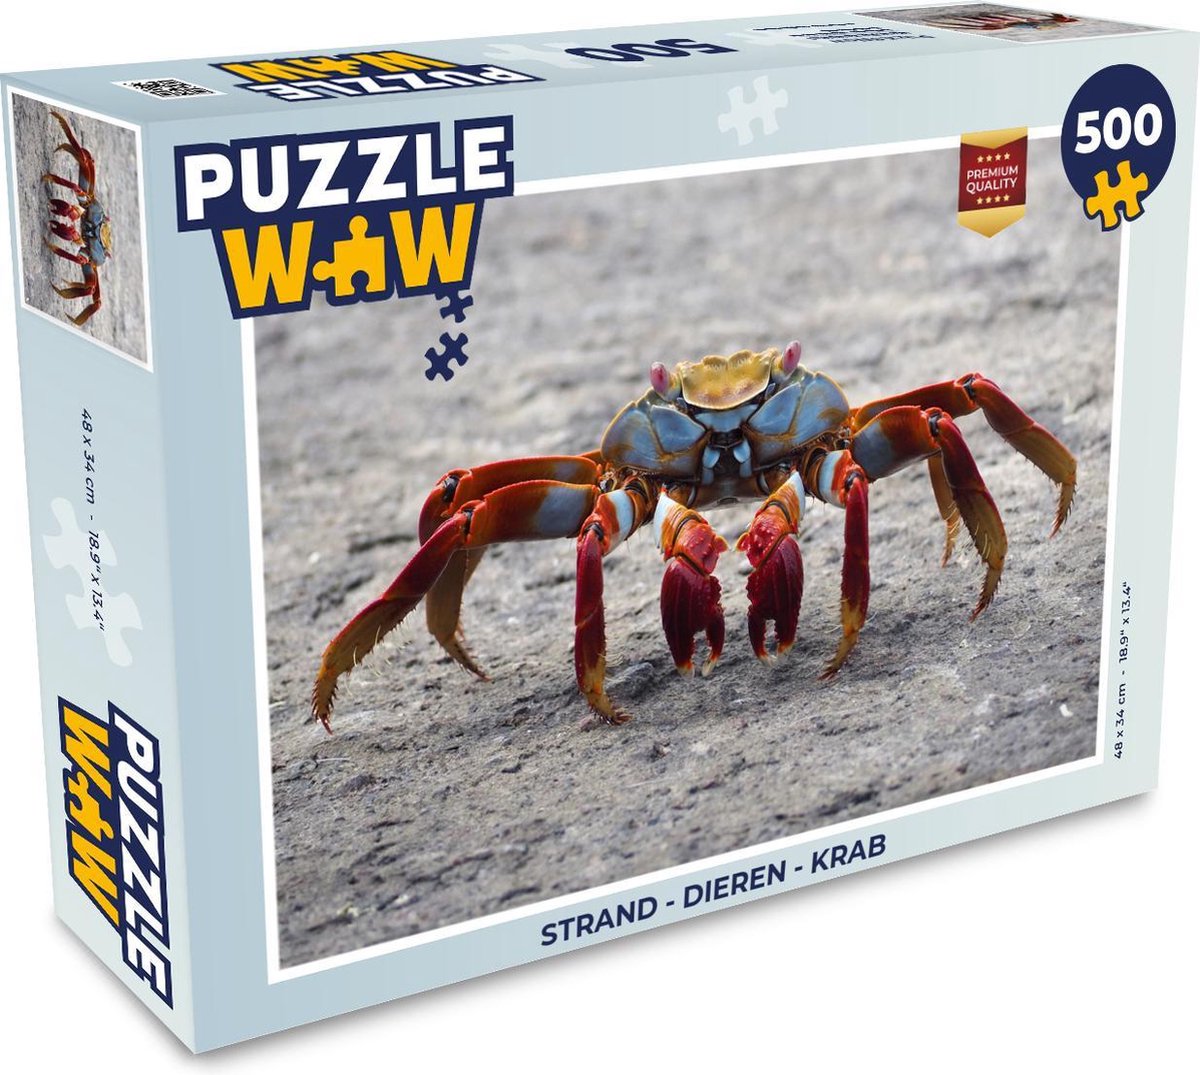 Afbeelding van product PuzzleWow  Puzzel Strand - Dieren - Krab - Legpuzzel - Puzzel 500 stukjes